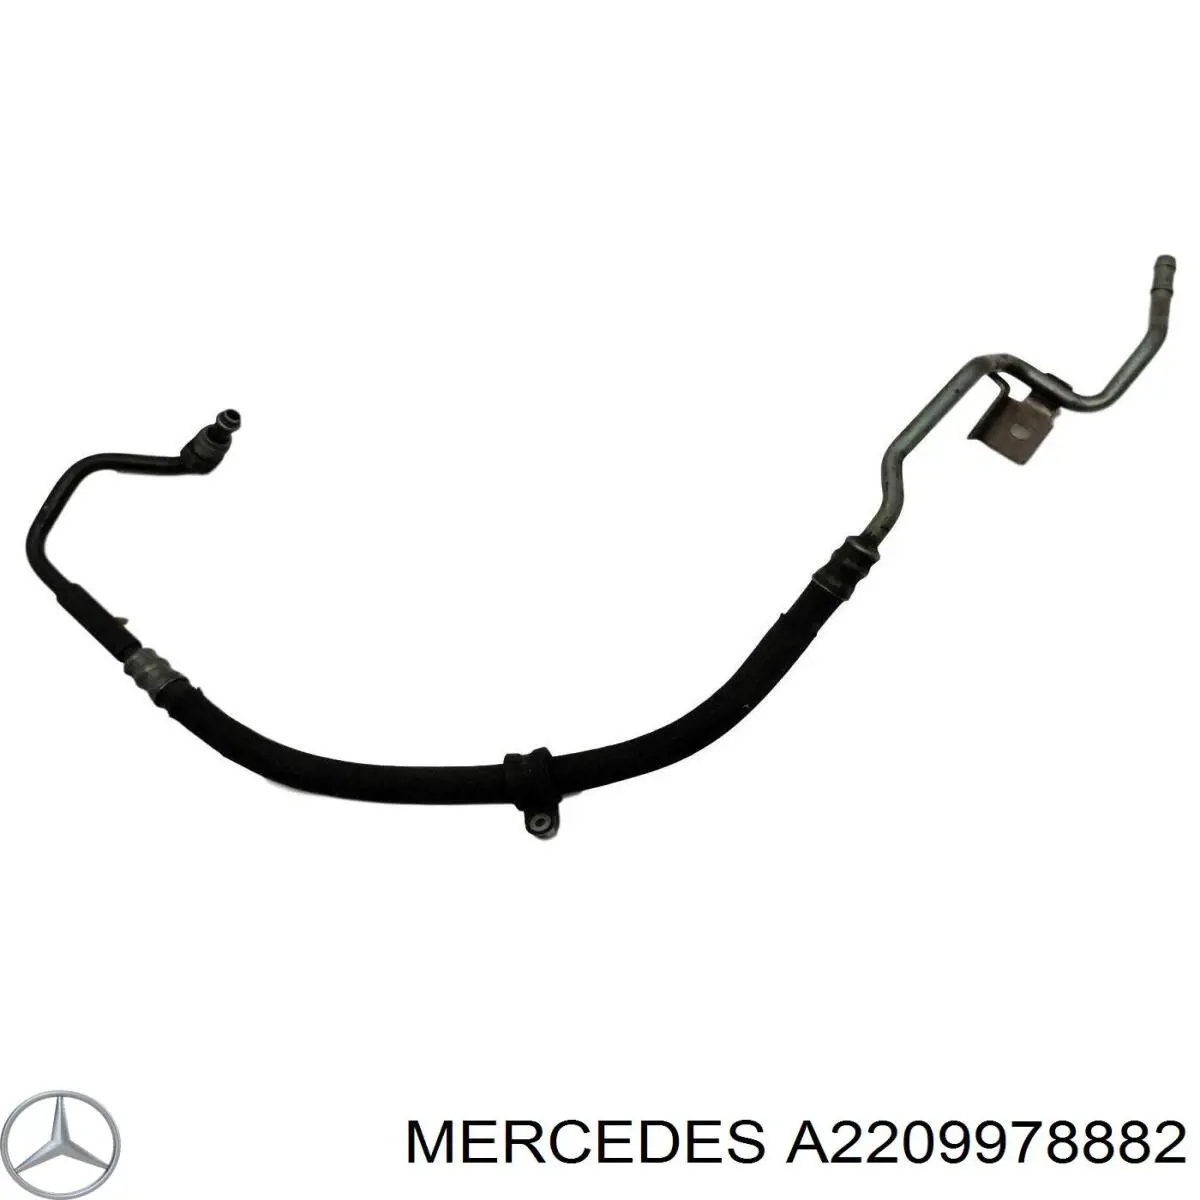 A2209972652 Mercedes шланг гур низкого давления, от рейки (механизма к радиатору)